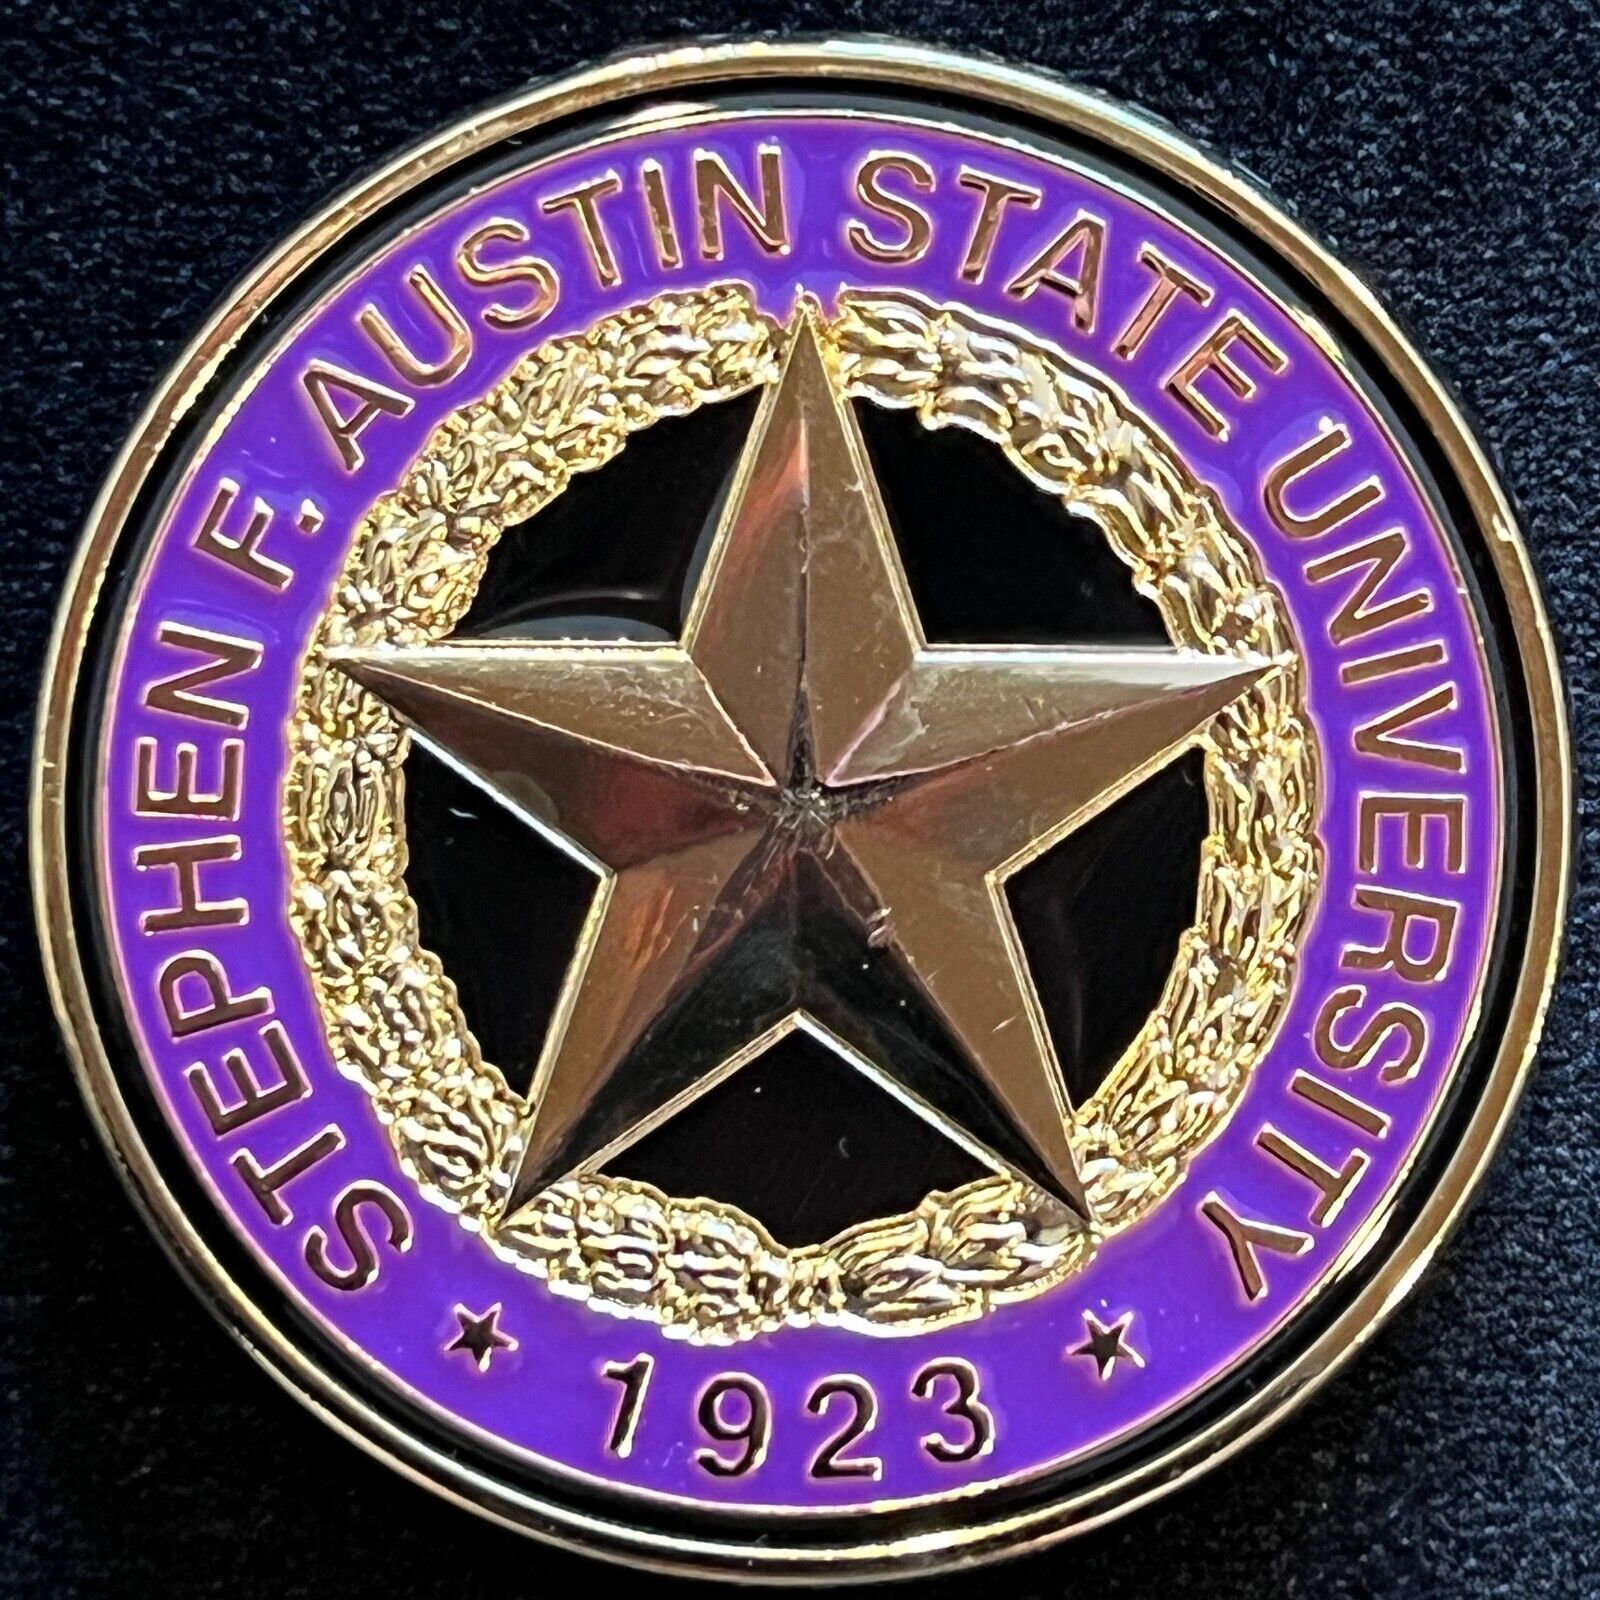 Stephen F Austin State University VRC Veterans Resource Center Challenge Coin